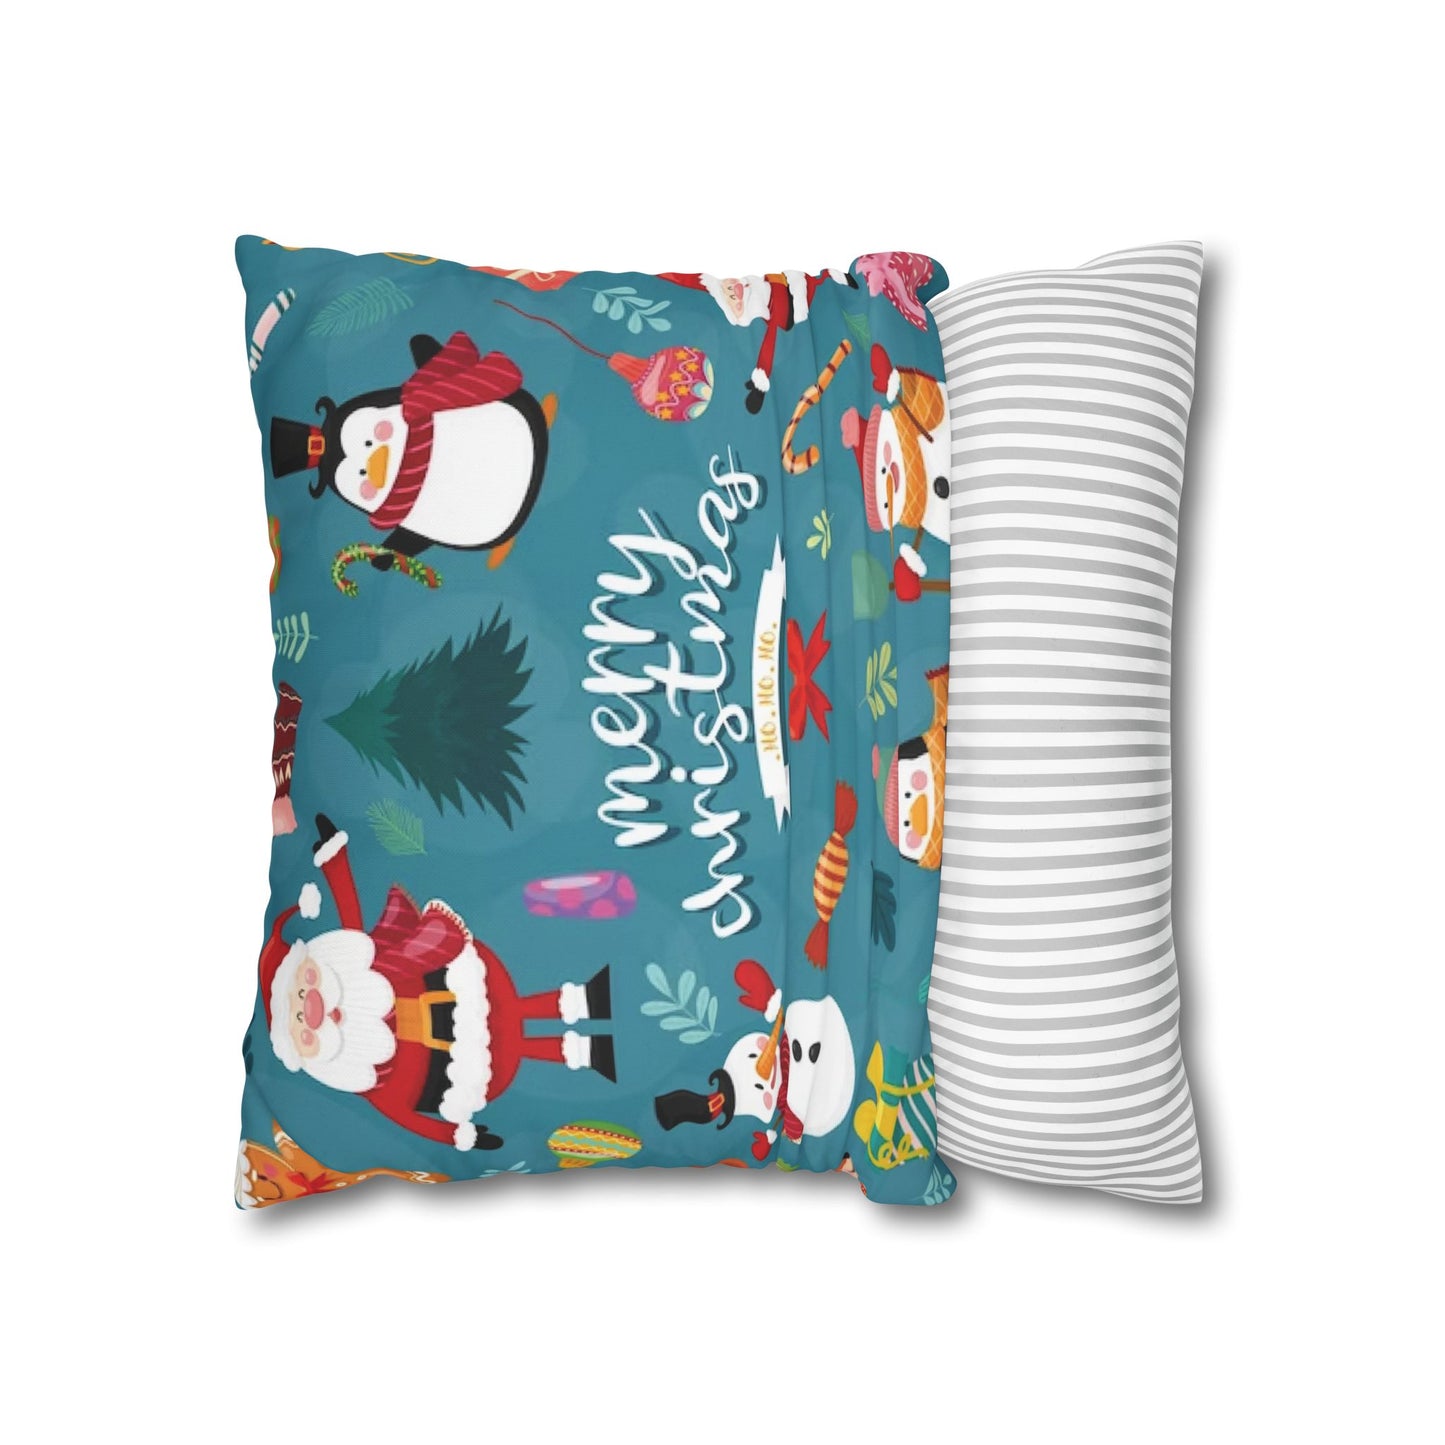 Christmas Pillow Covers 18x18 Spun Polyester